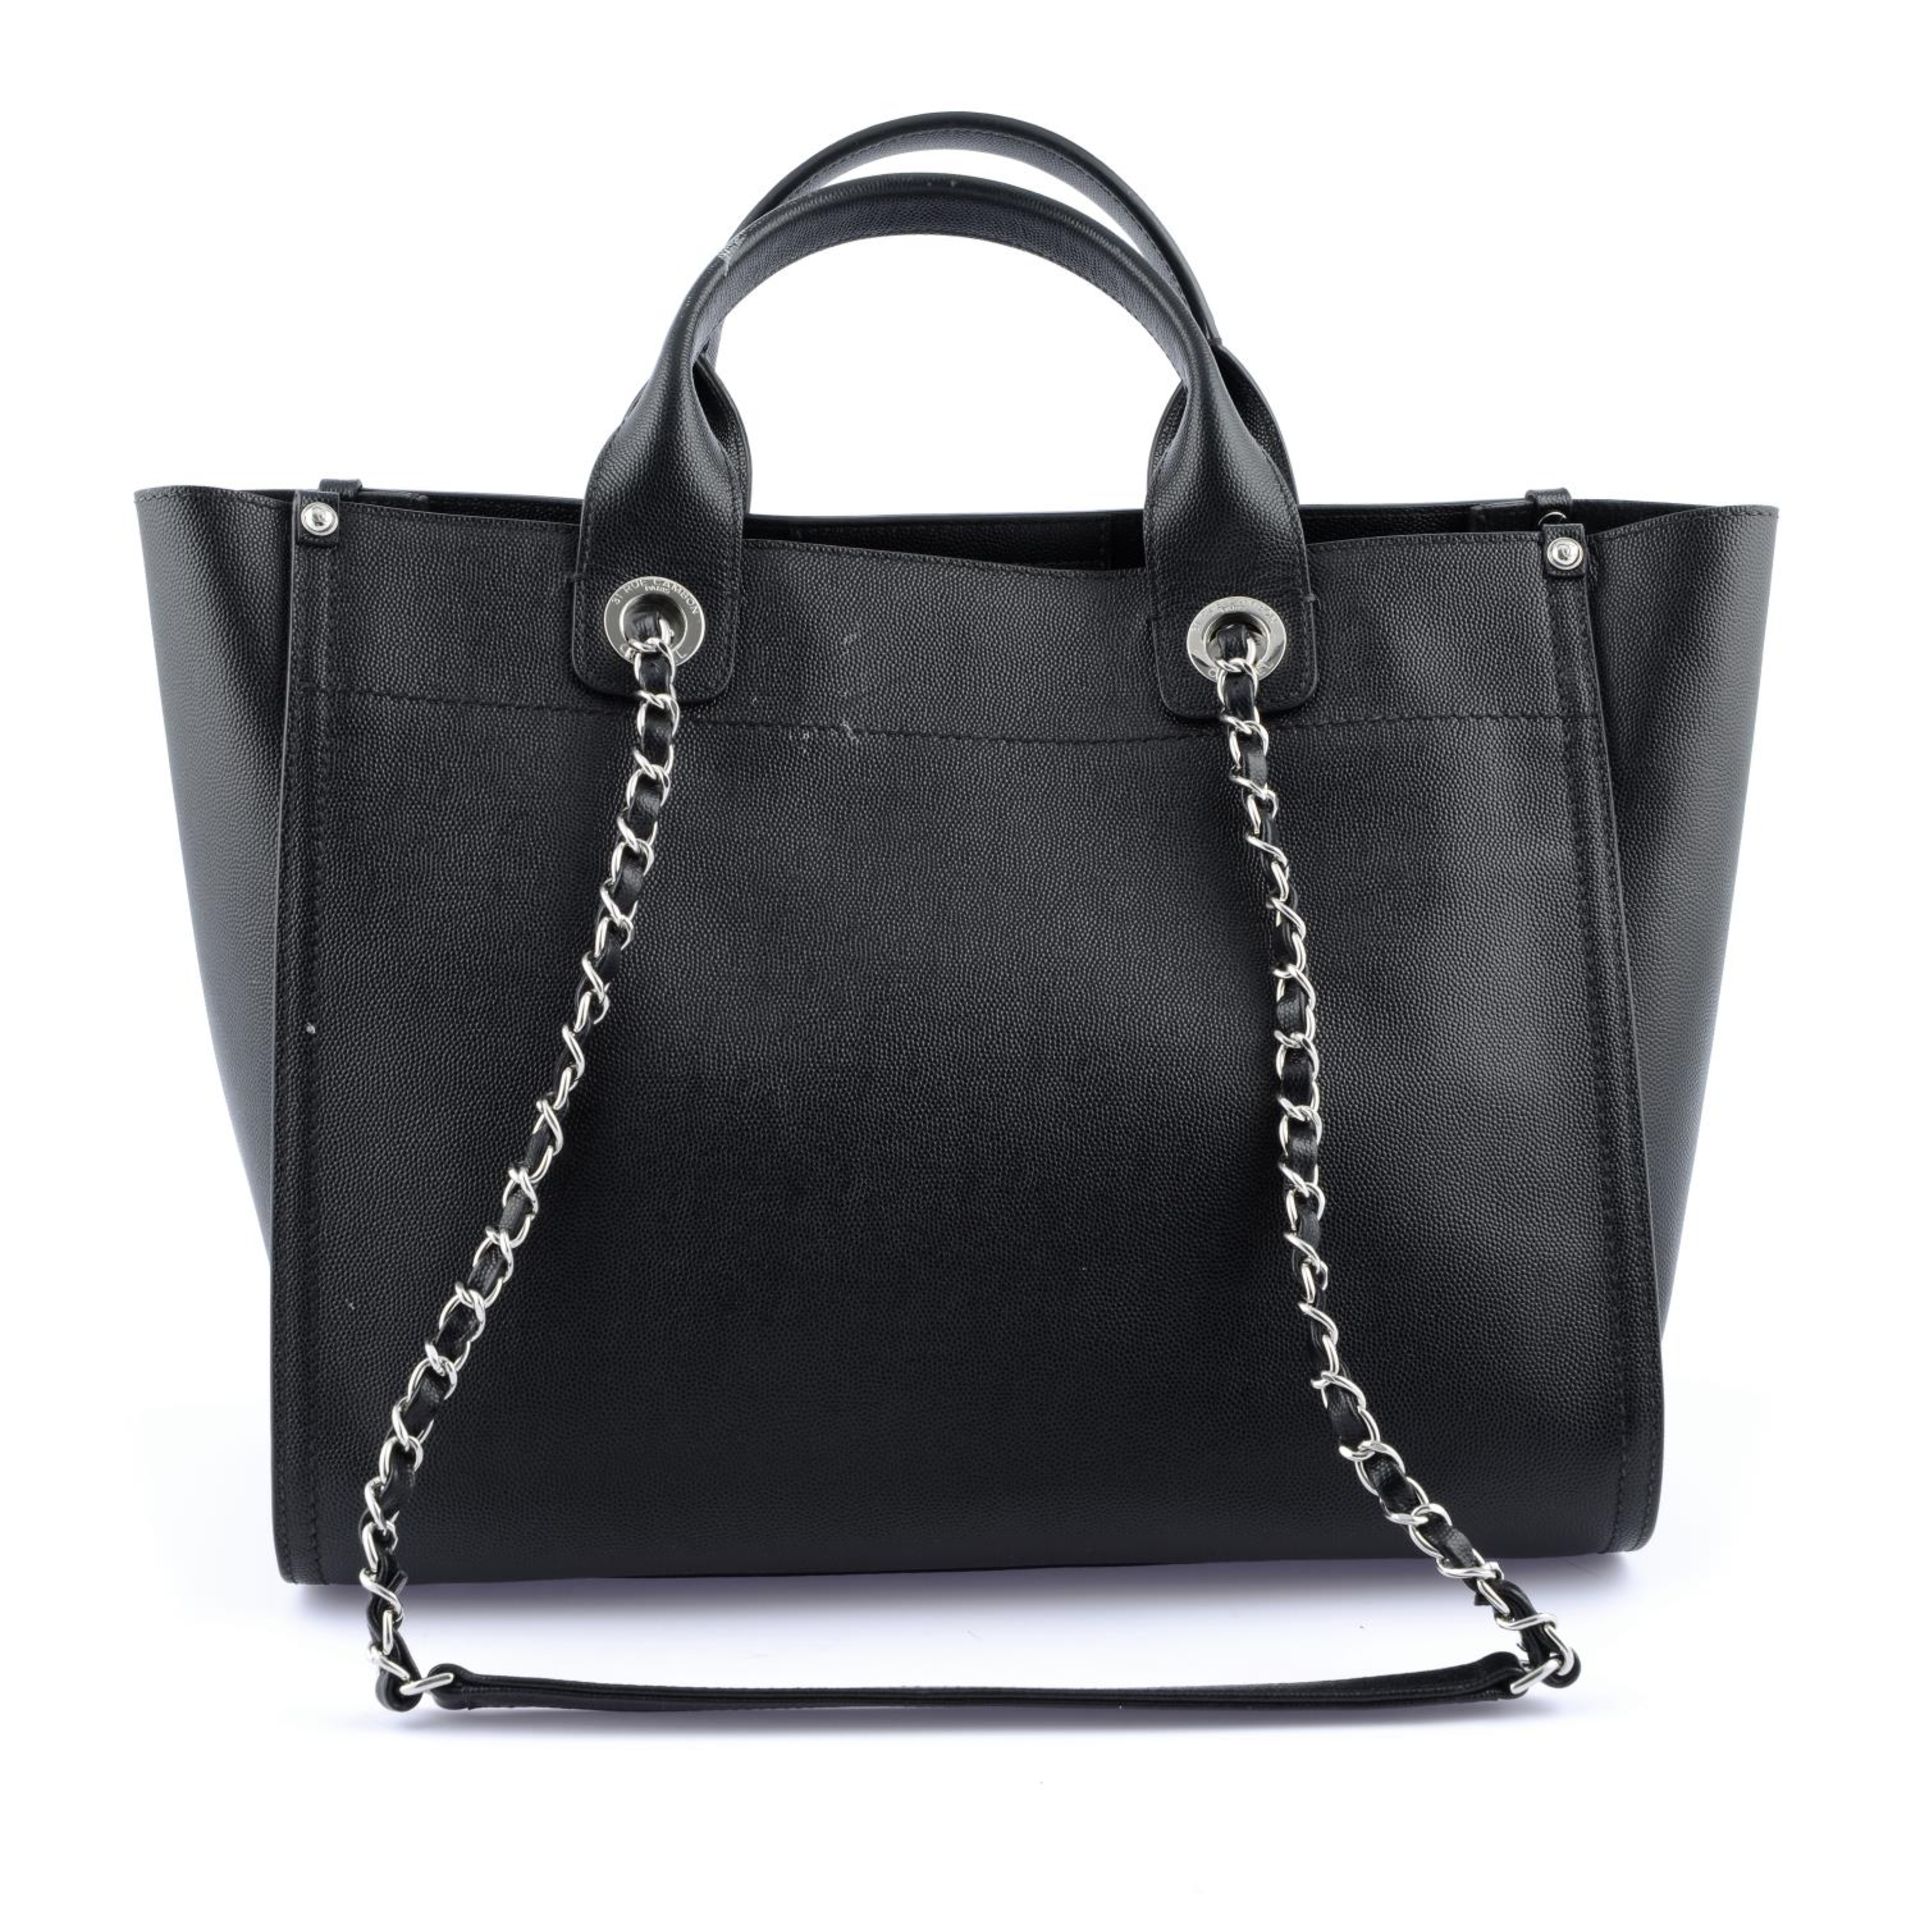 CHANEL - a black Studded Deauville Tote handbag. - Bild 2 aus 6